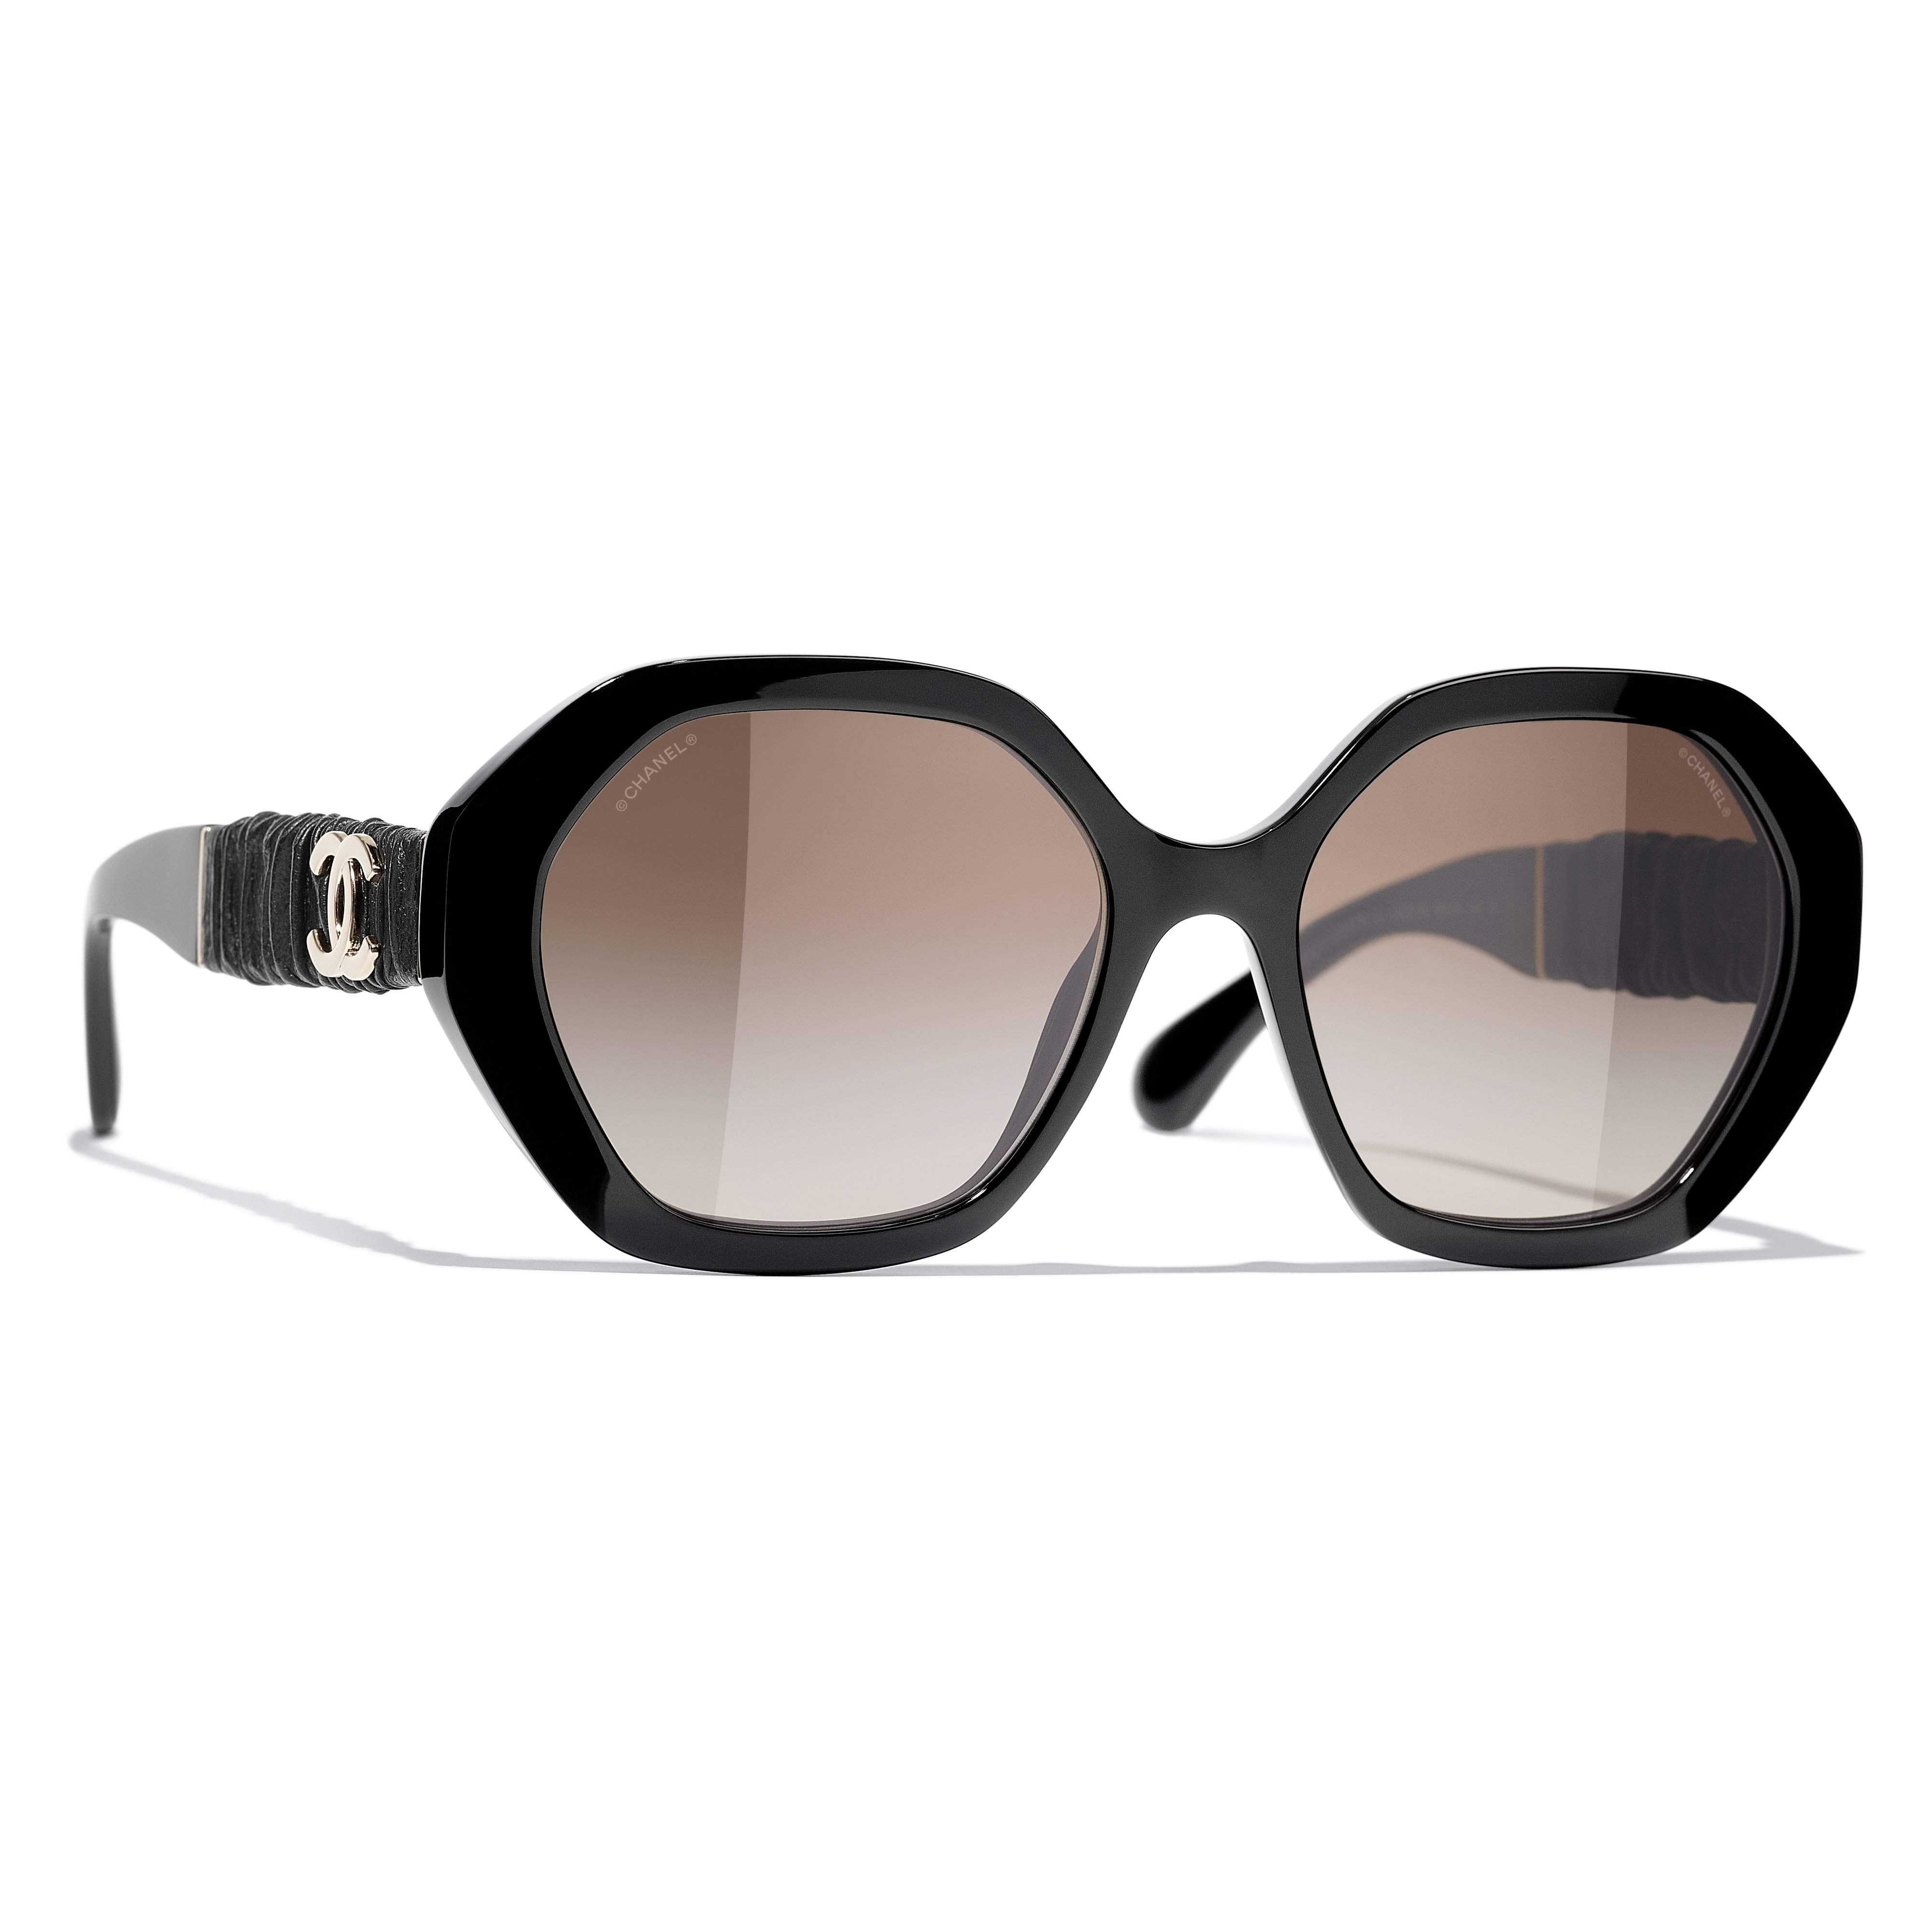 Sunglasses Chanel C622S5 55-18 Black in stock | Price 337,50 | Visiofactory